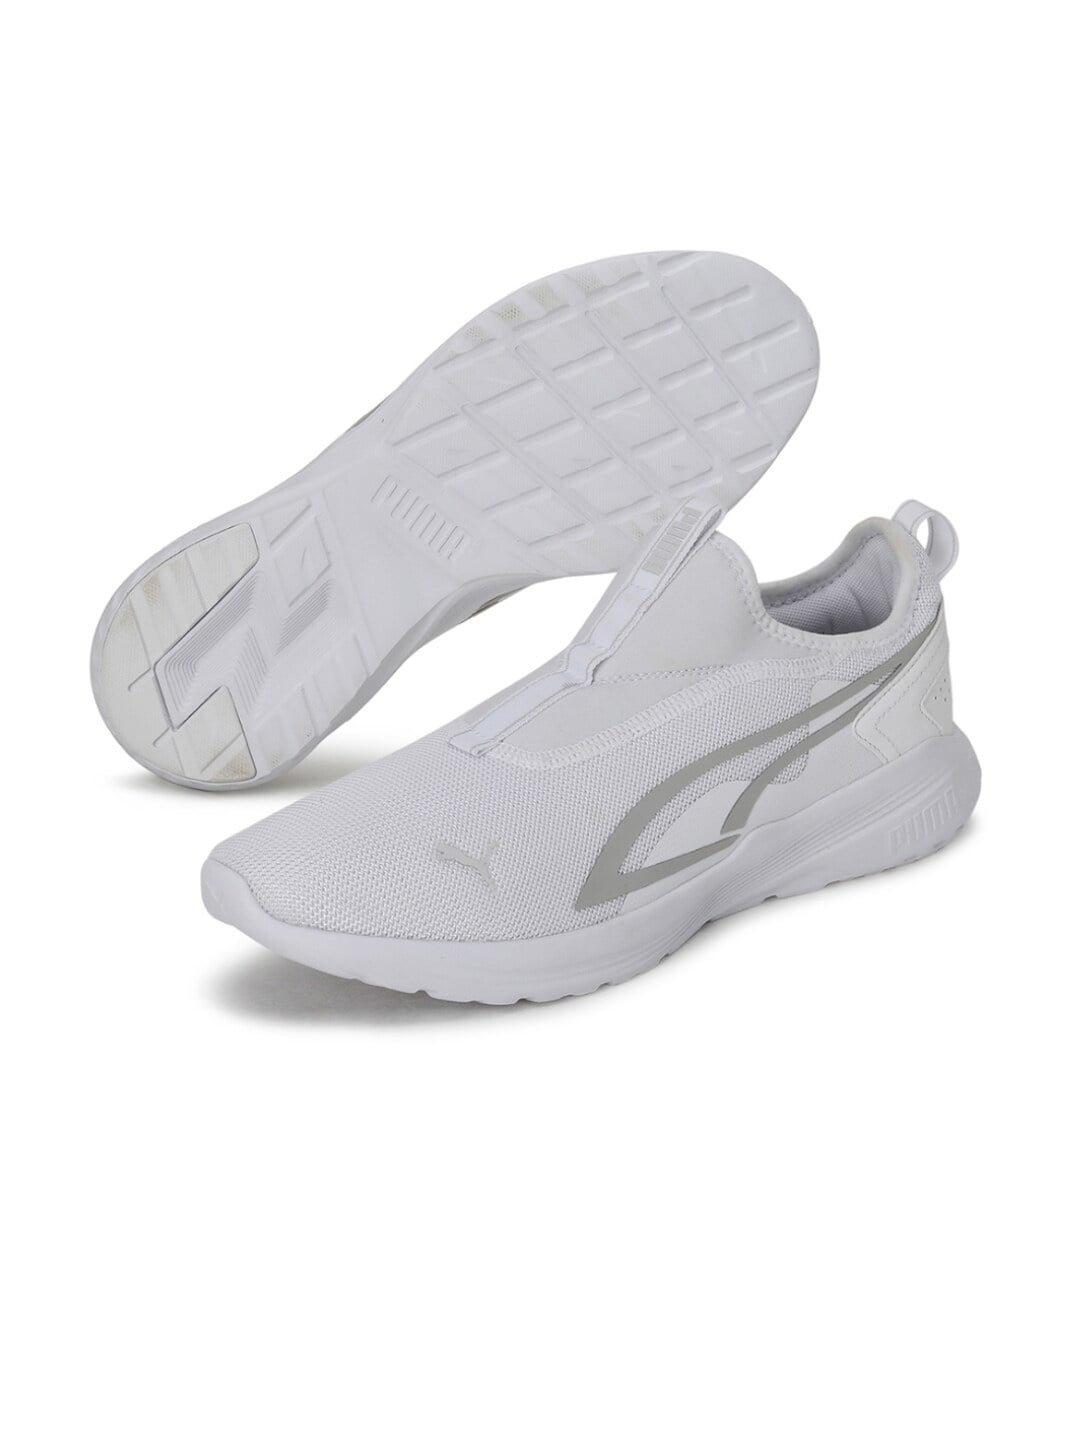 Puma Unisex White Woven Design Slip-On Sneakers Price in India